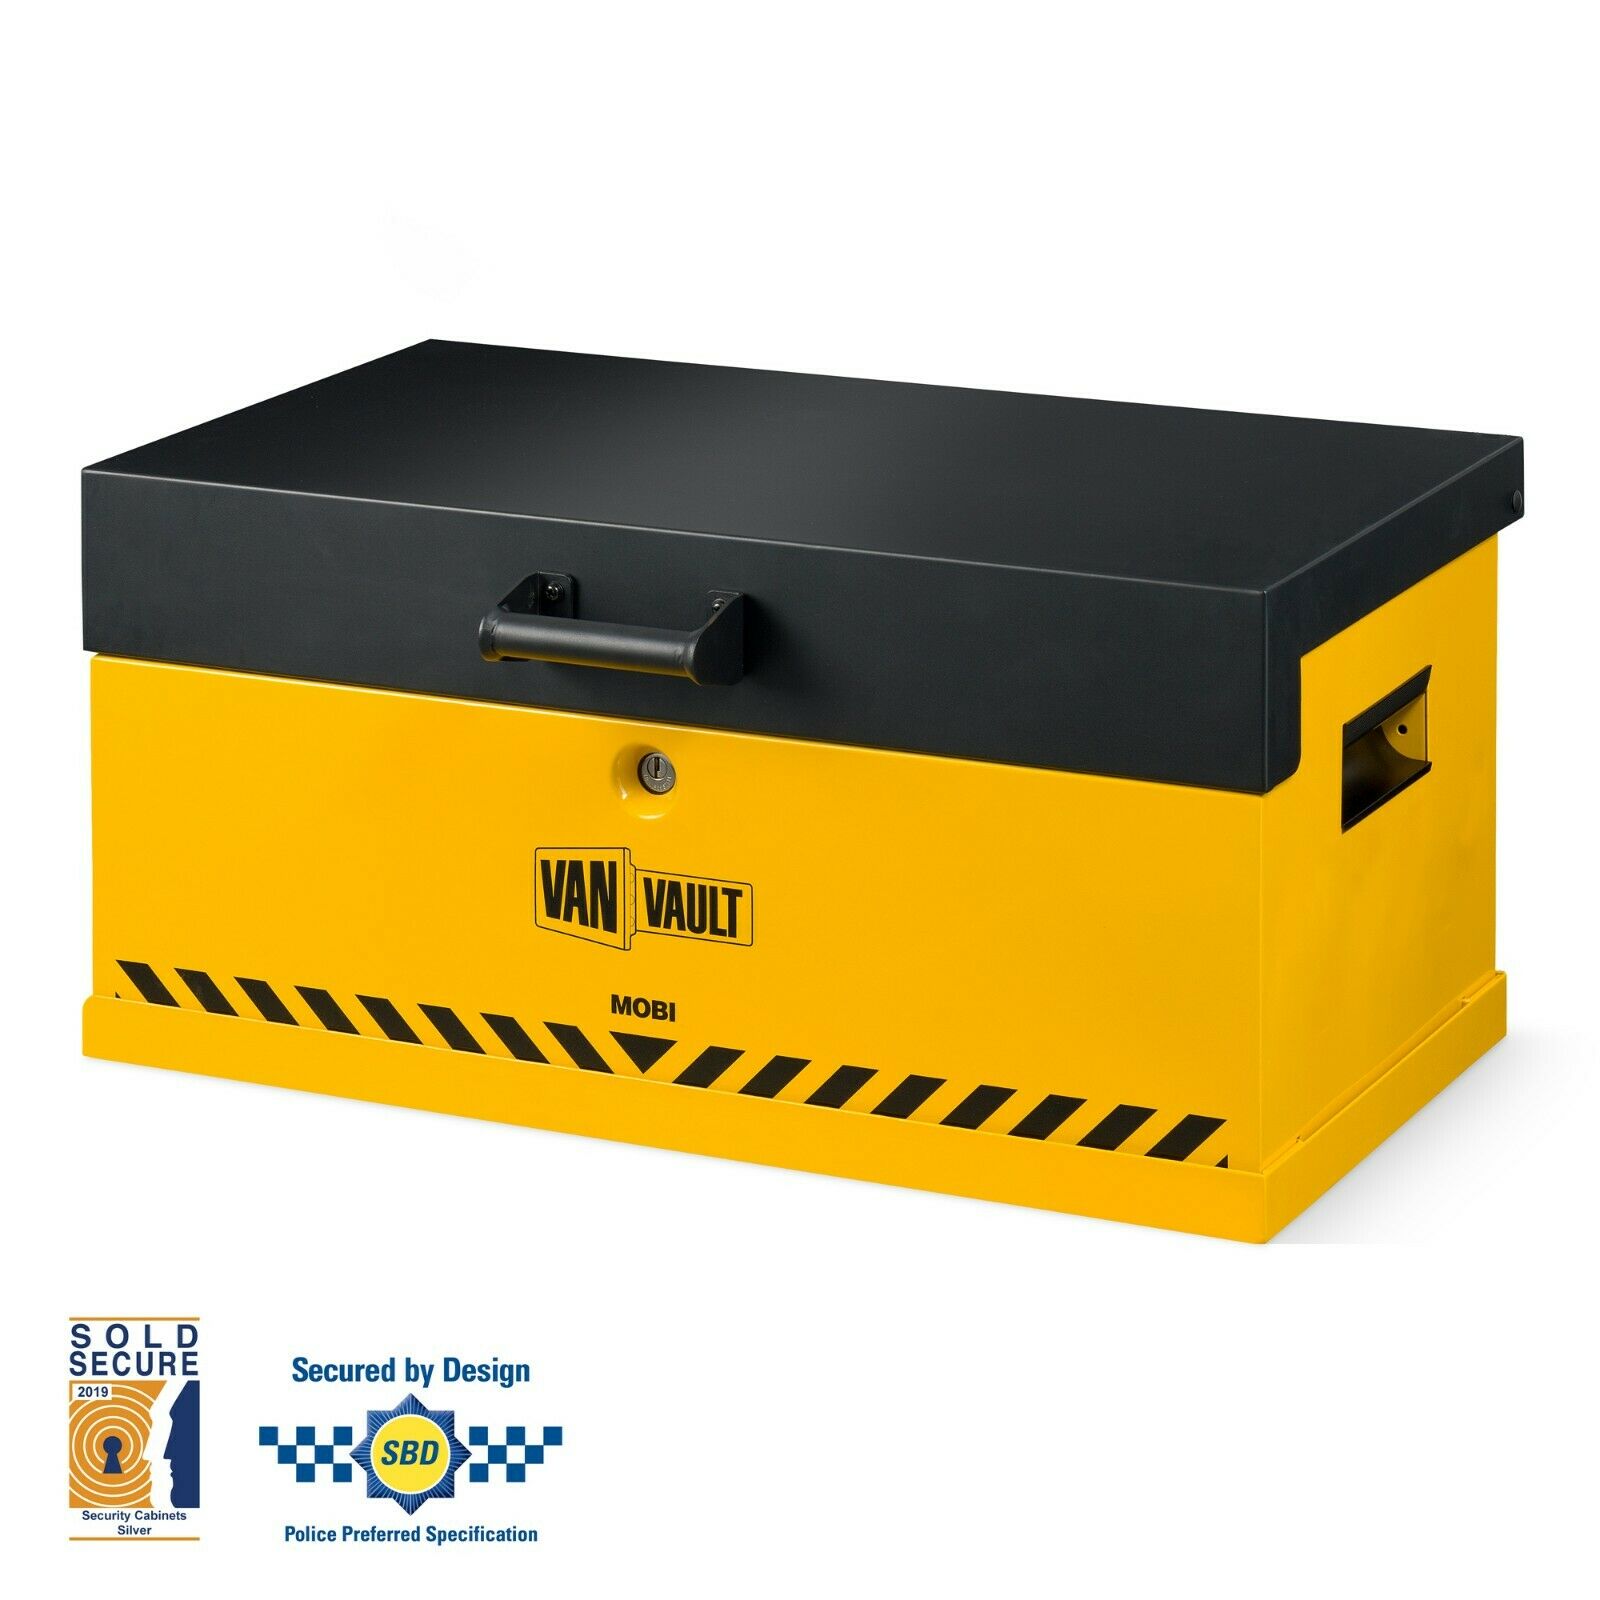 Van Vault S10850 Mobi Security Box + Docking Station